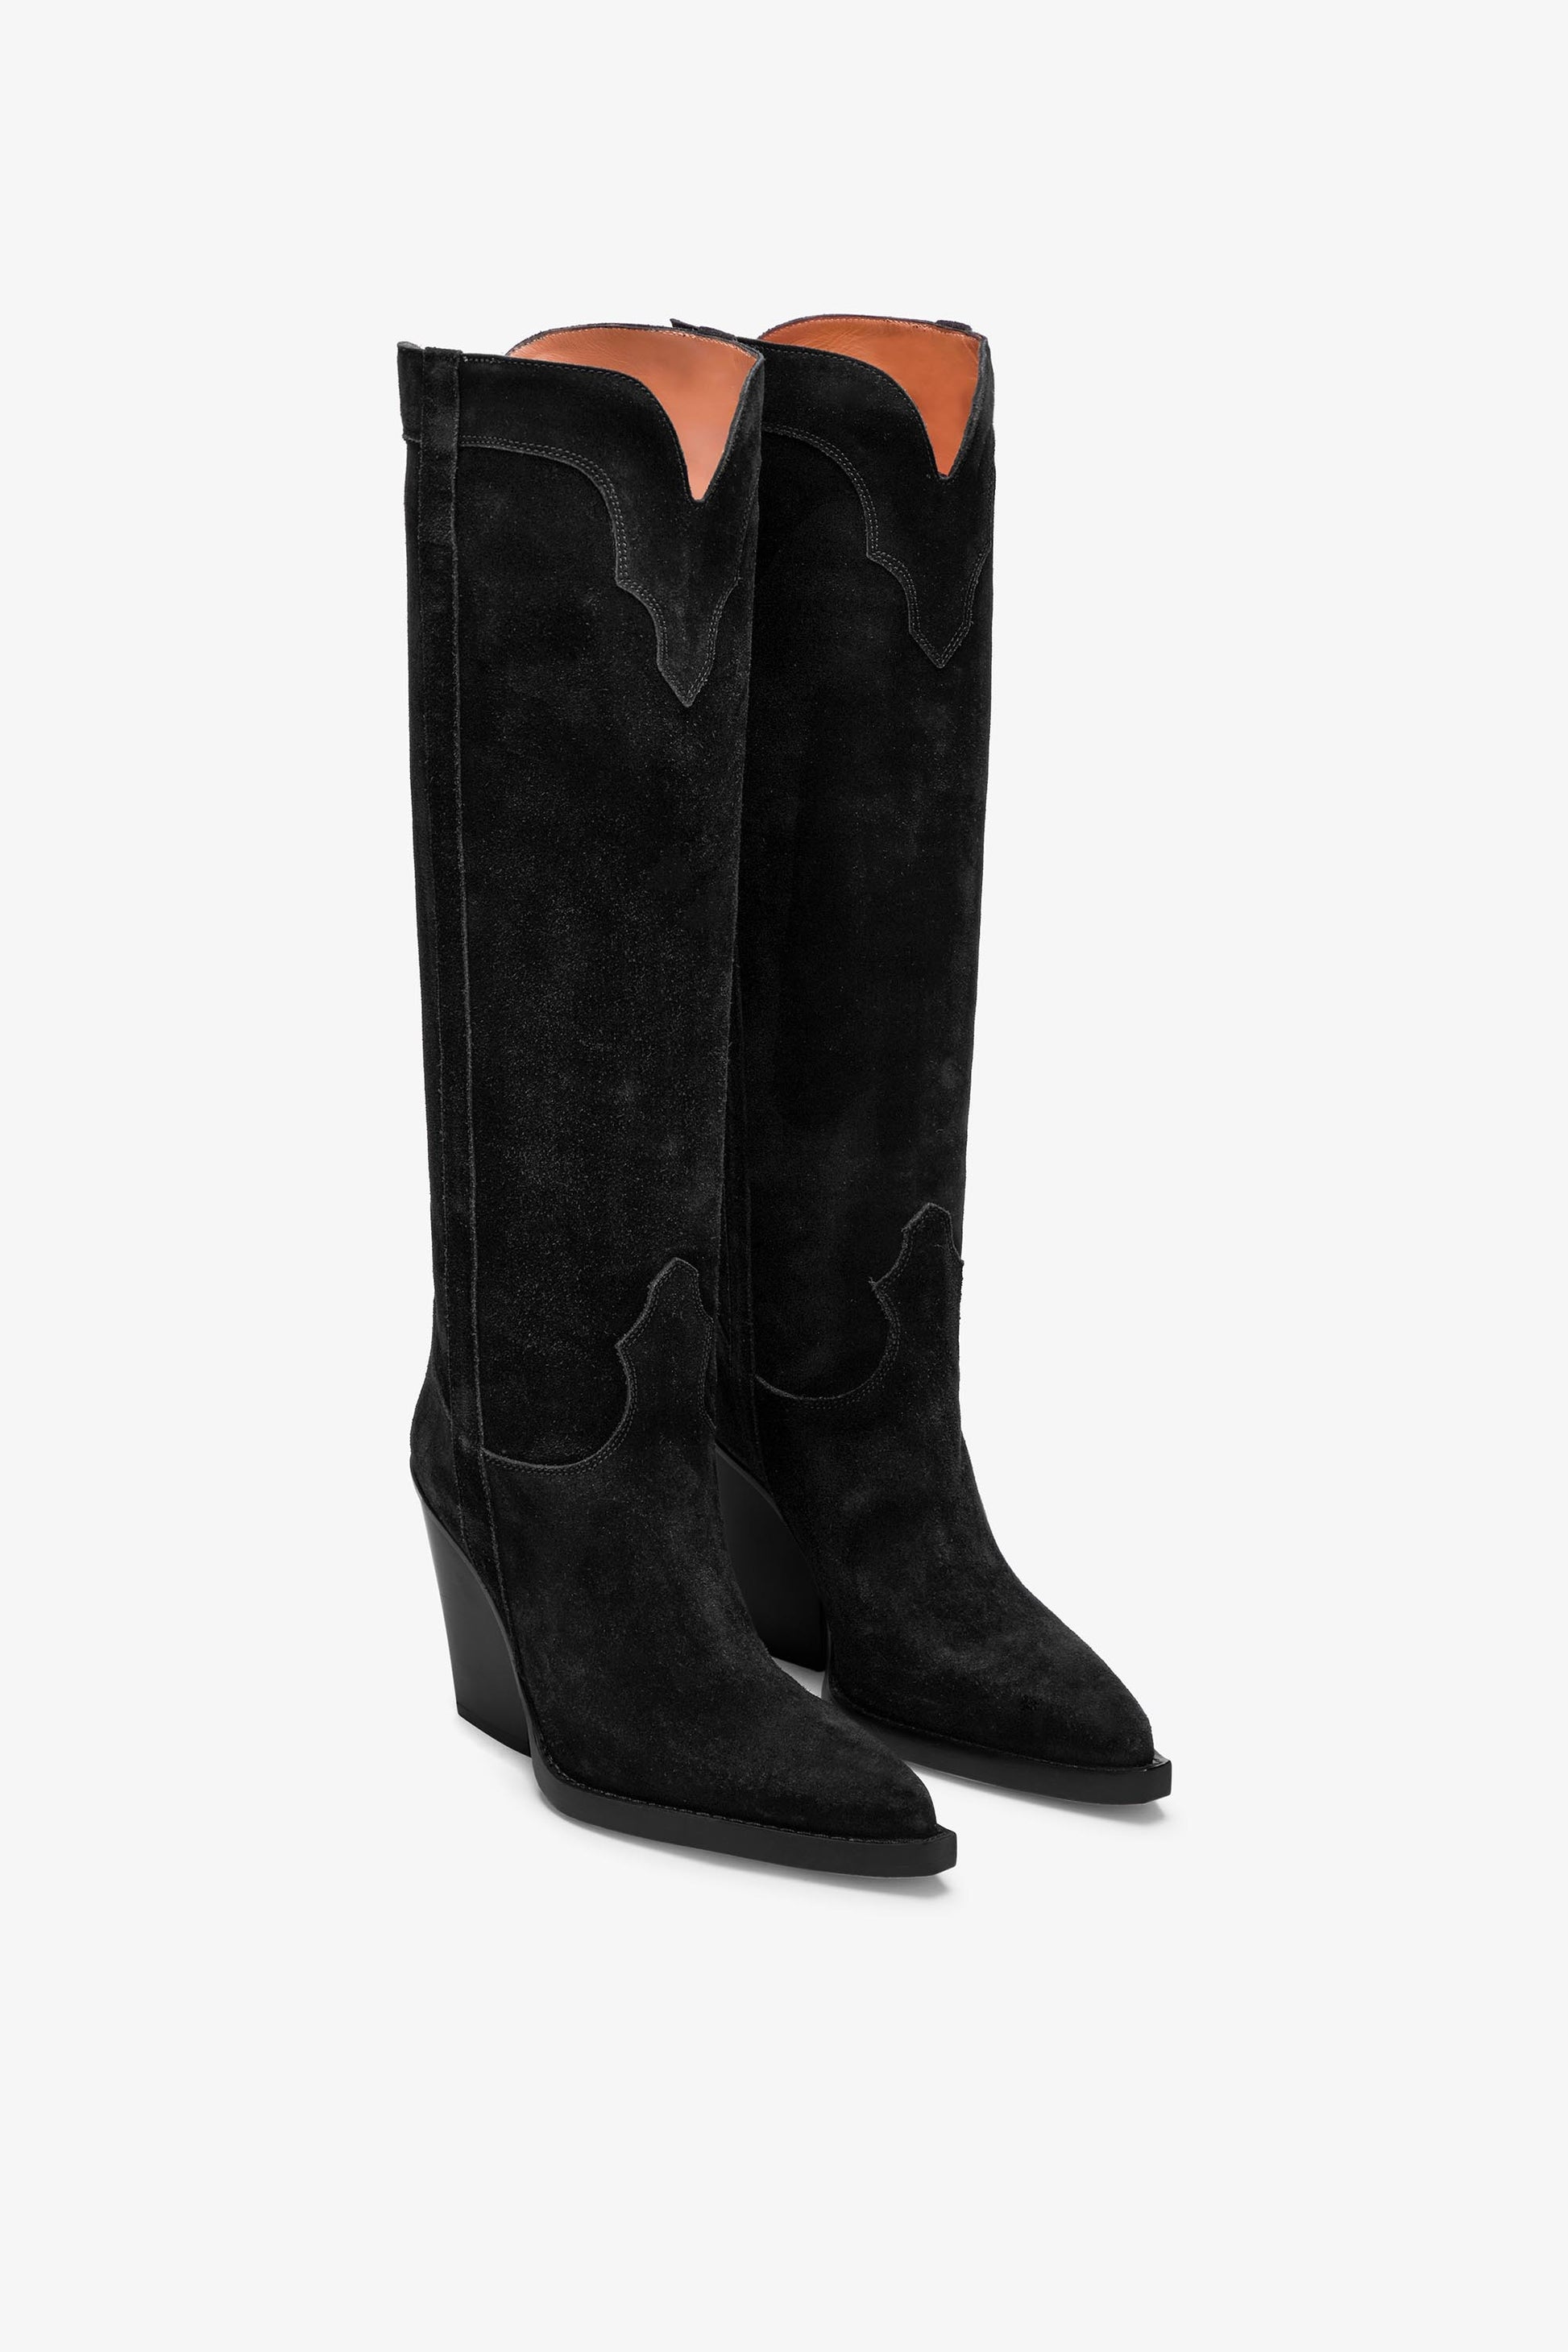 Black calf suede boots